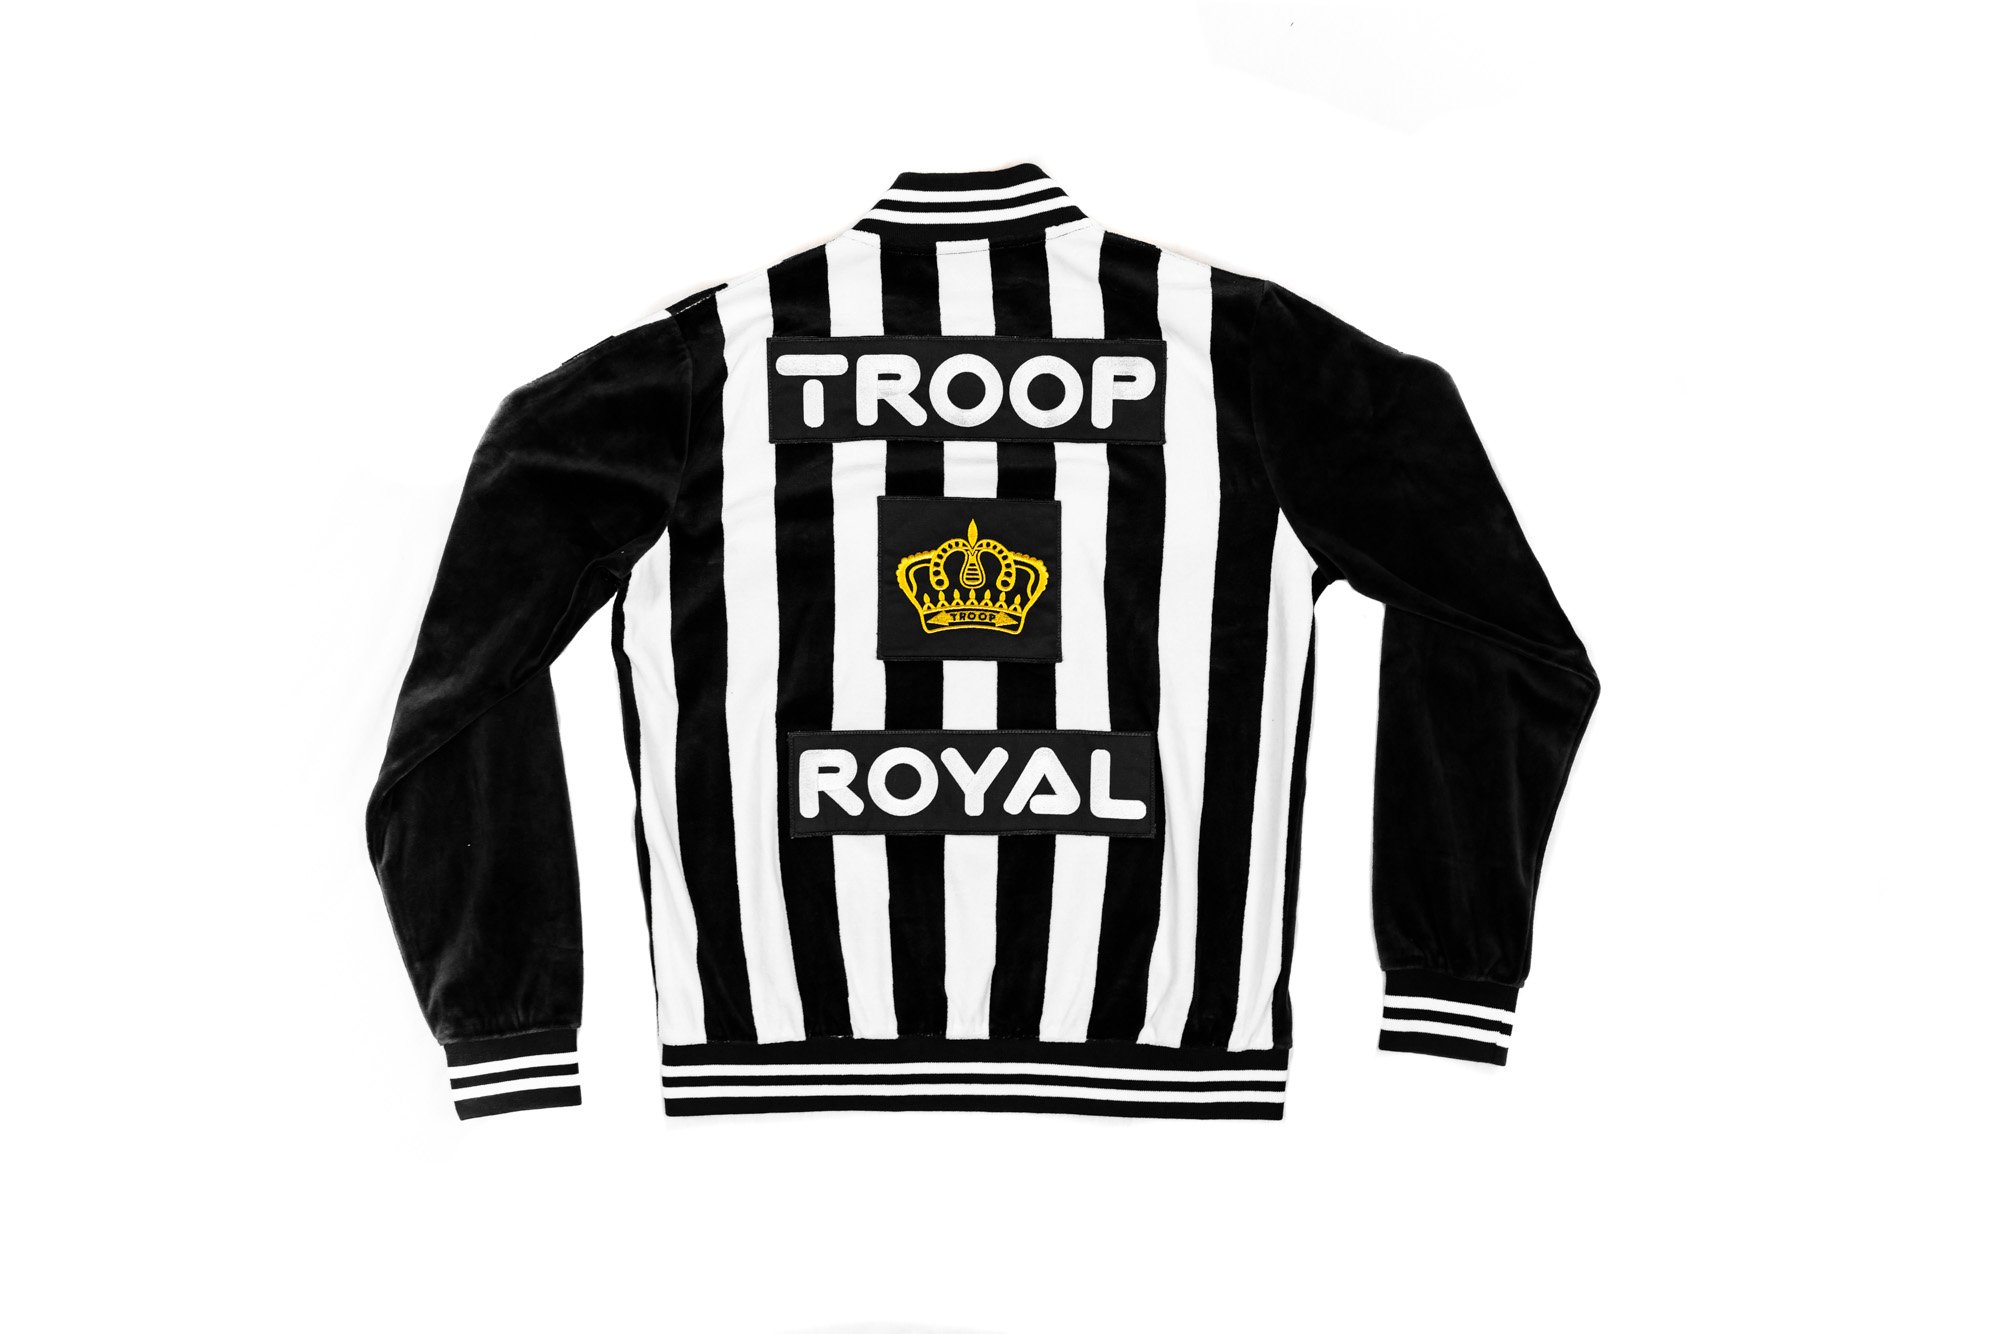 world of troop velour suit jacket